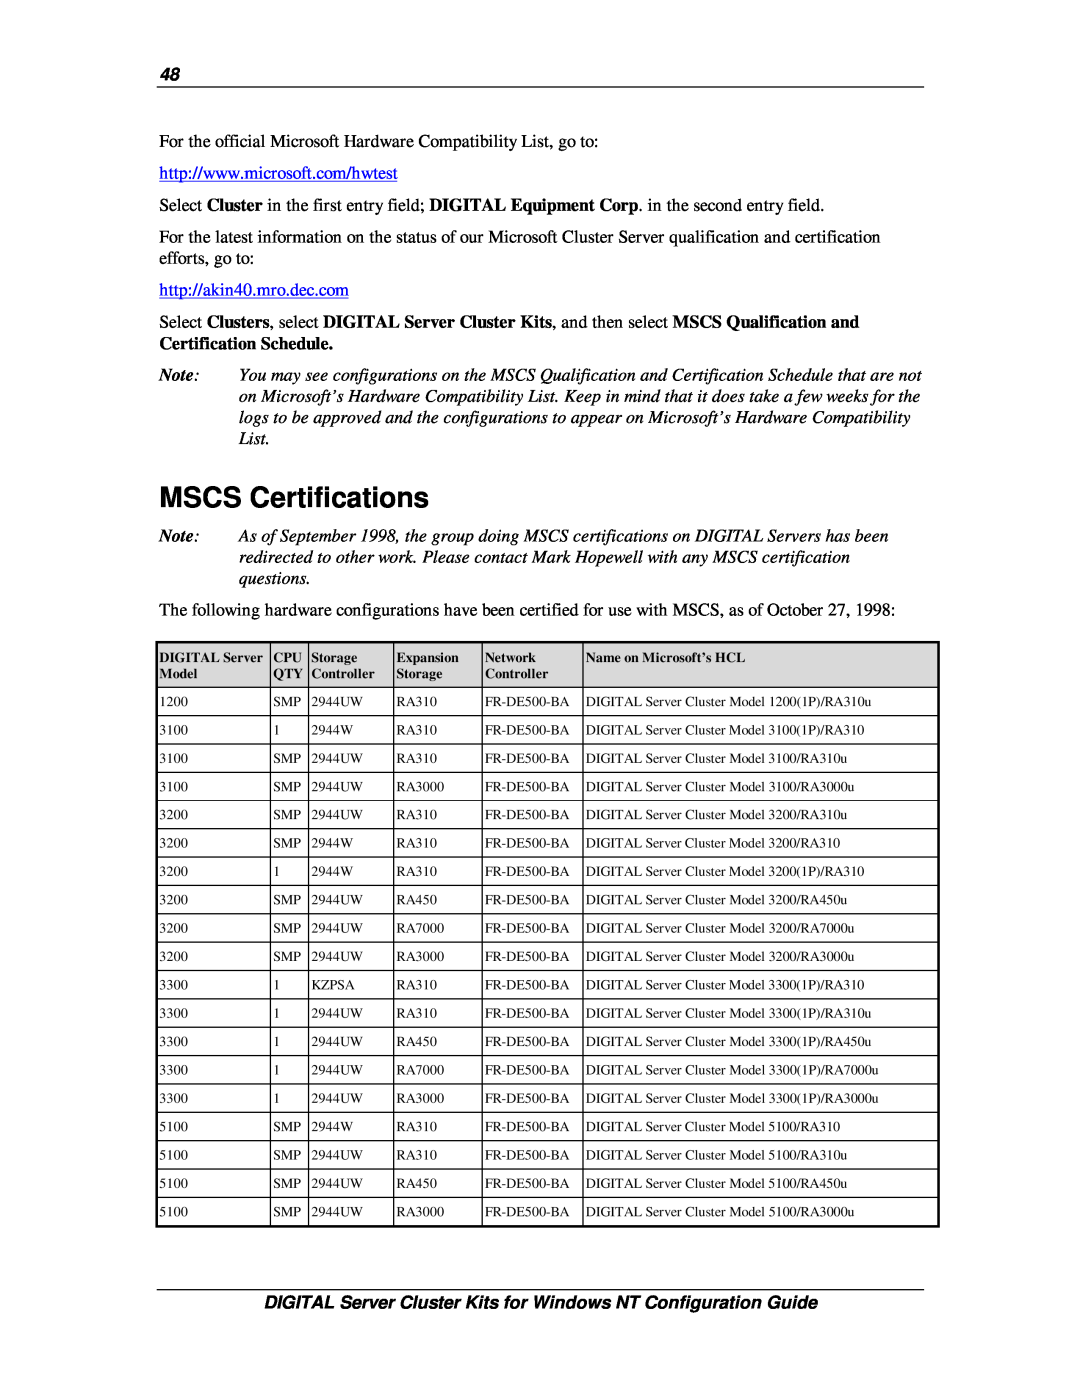 Compaq DIGITAL Server Cluster Kits for Windows NT MSCS Certifications, http//akin40.mro.dec.com, Certification Schedule 